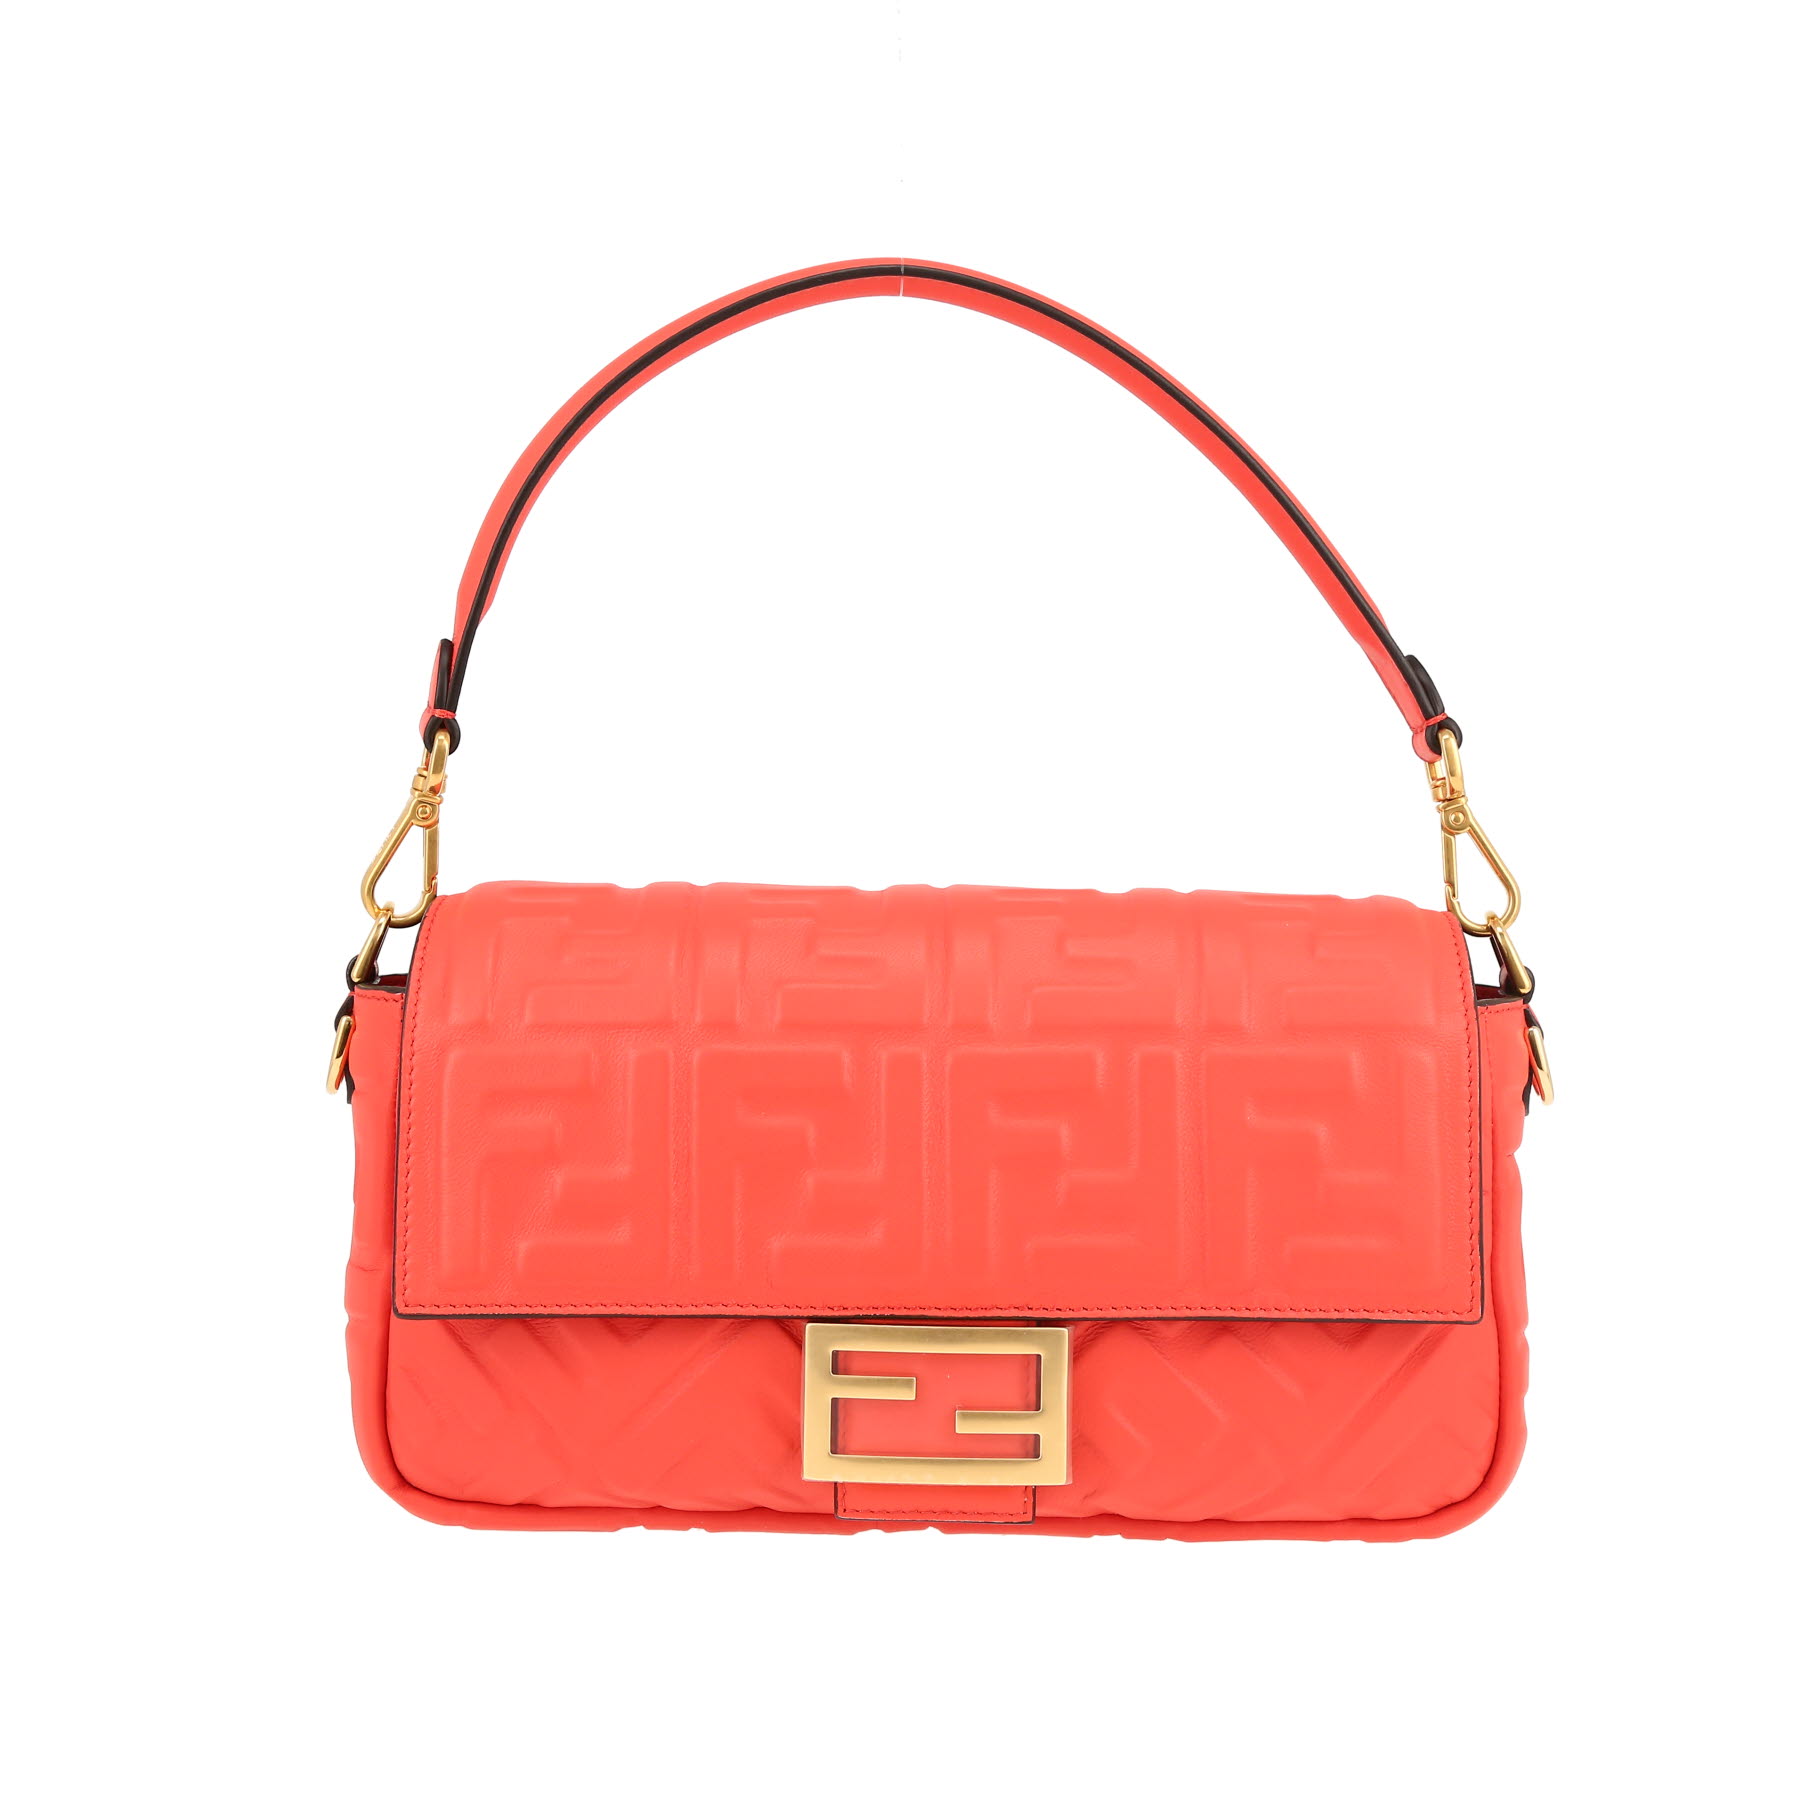 Baguette Handbag In Coral Leather